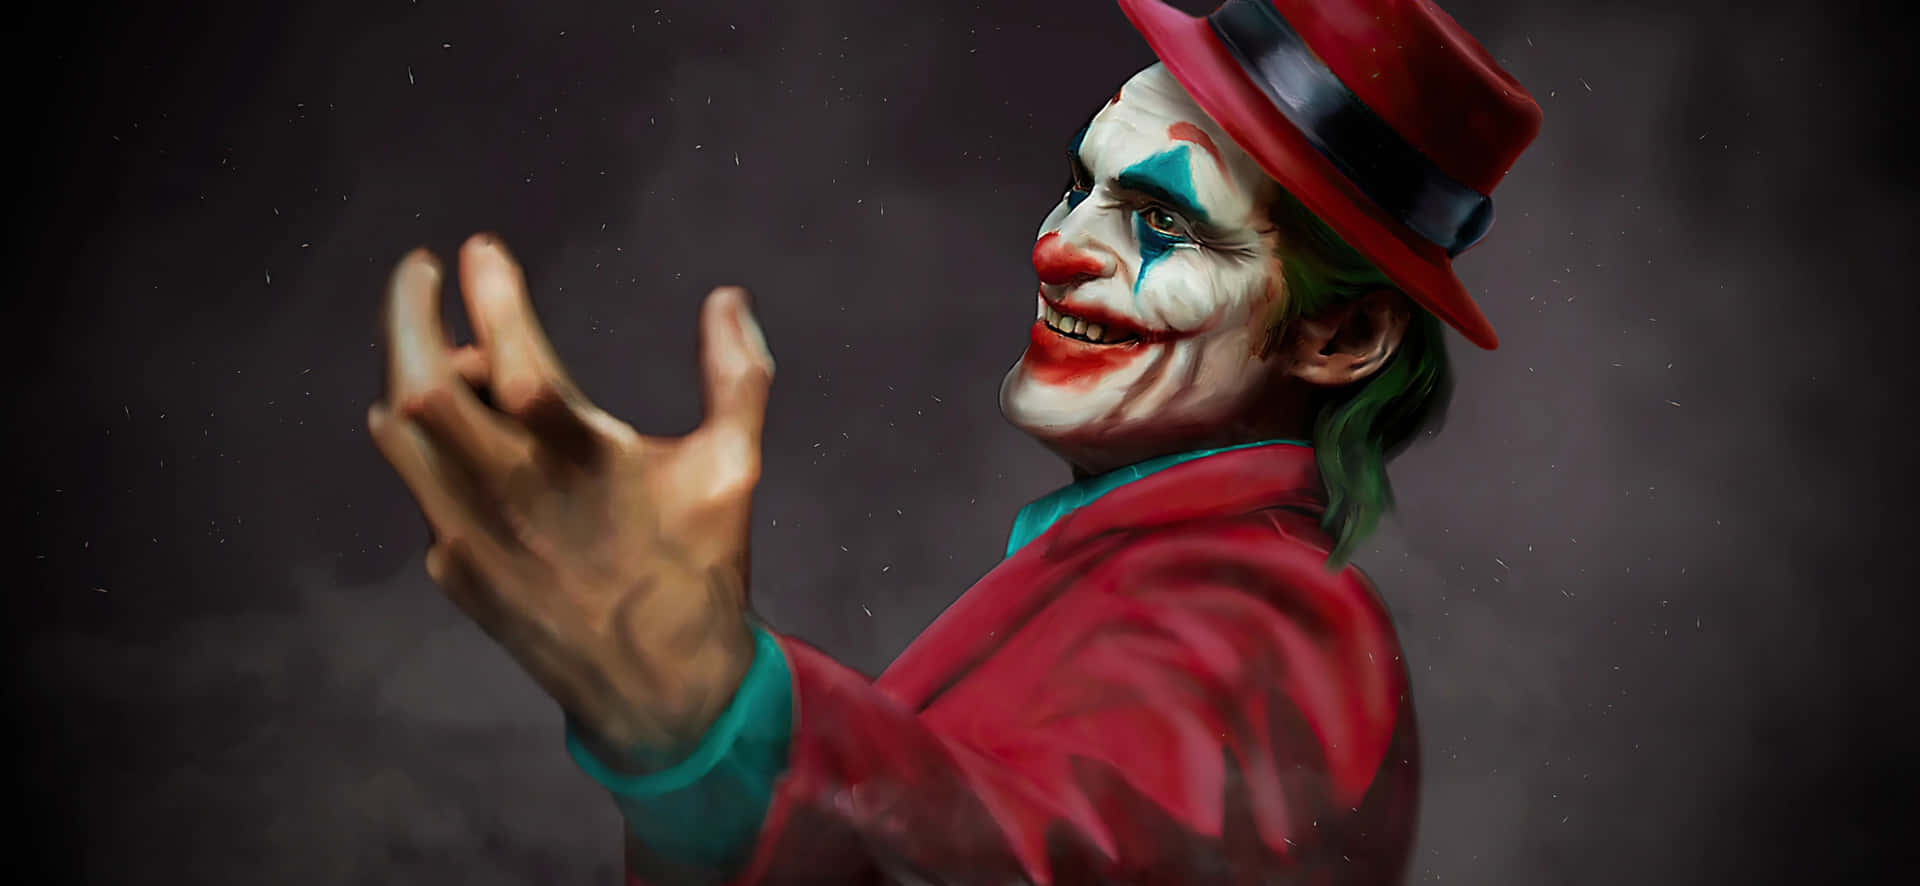 Intensity Unleashed - The Joker In The Moonlight